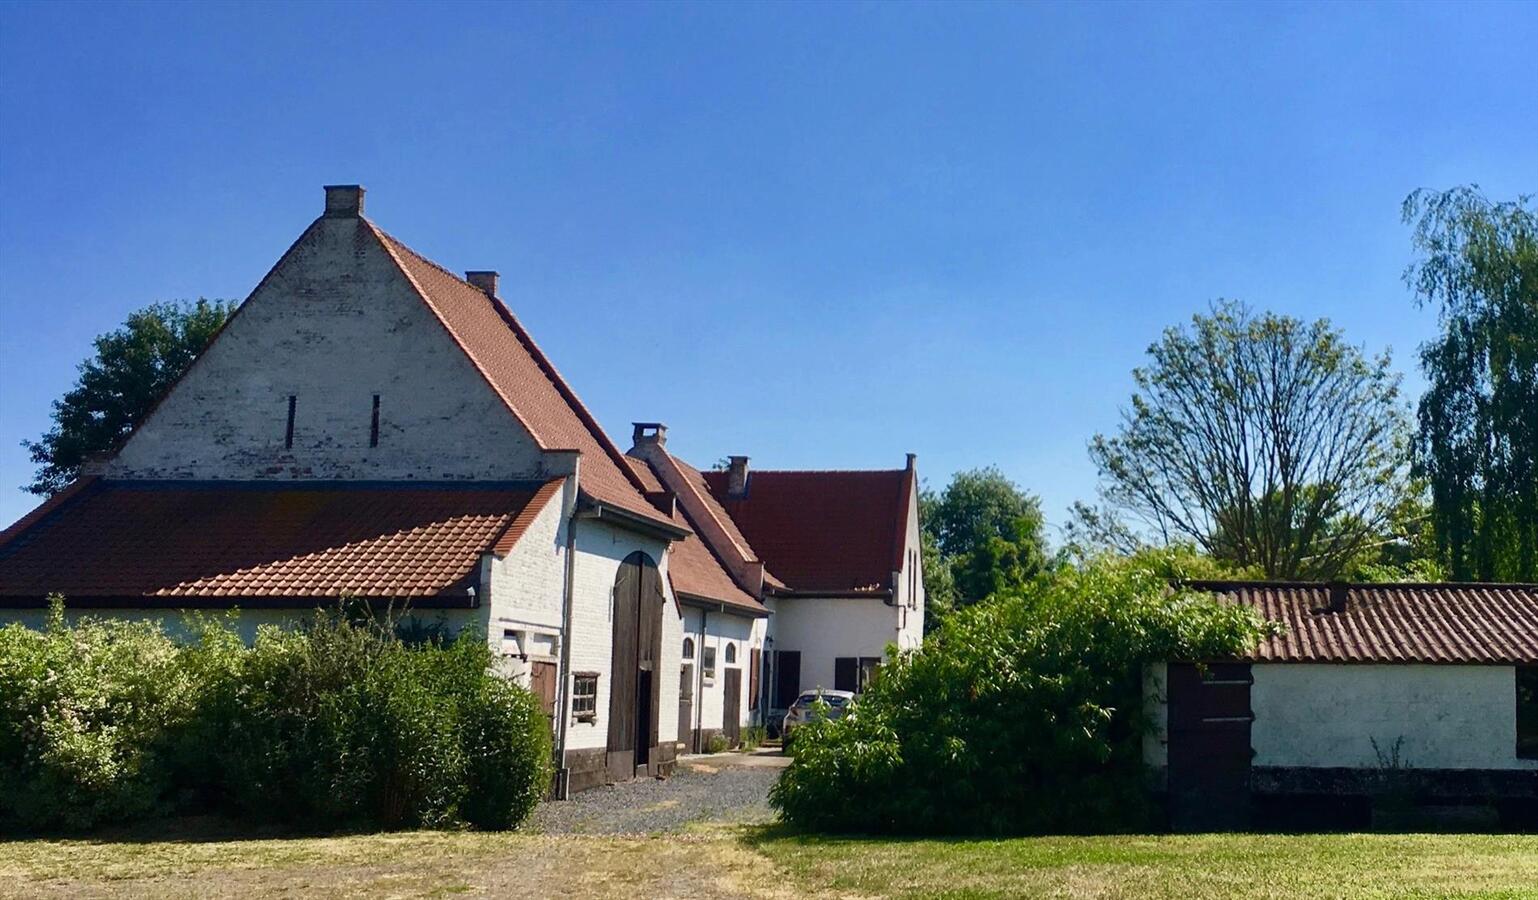 Property sold in Klerken